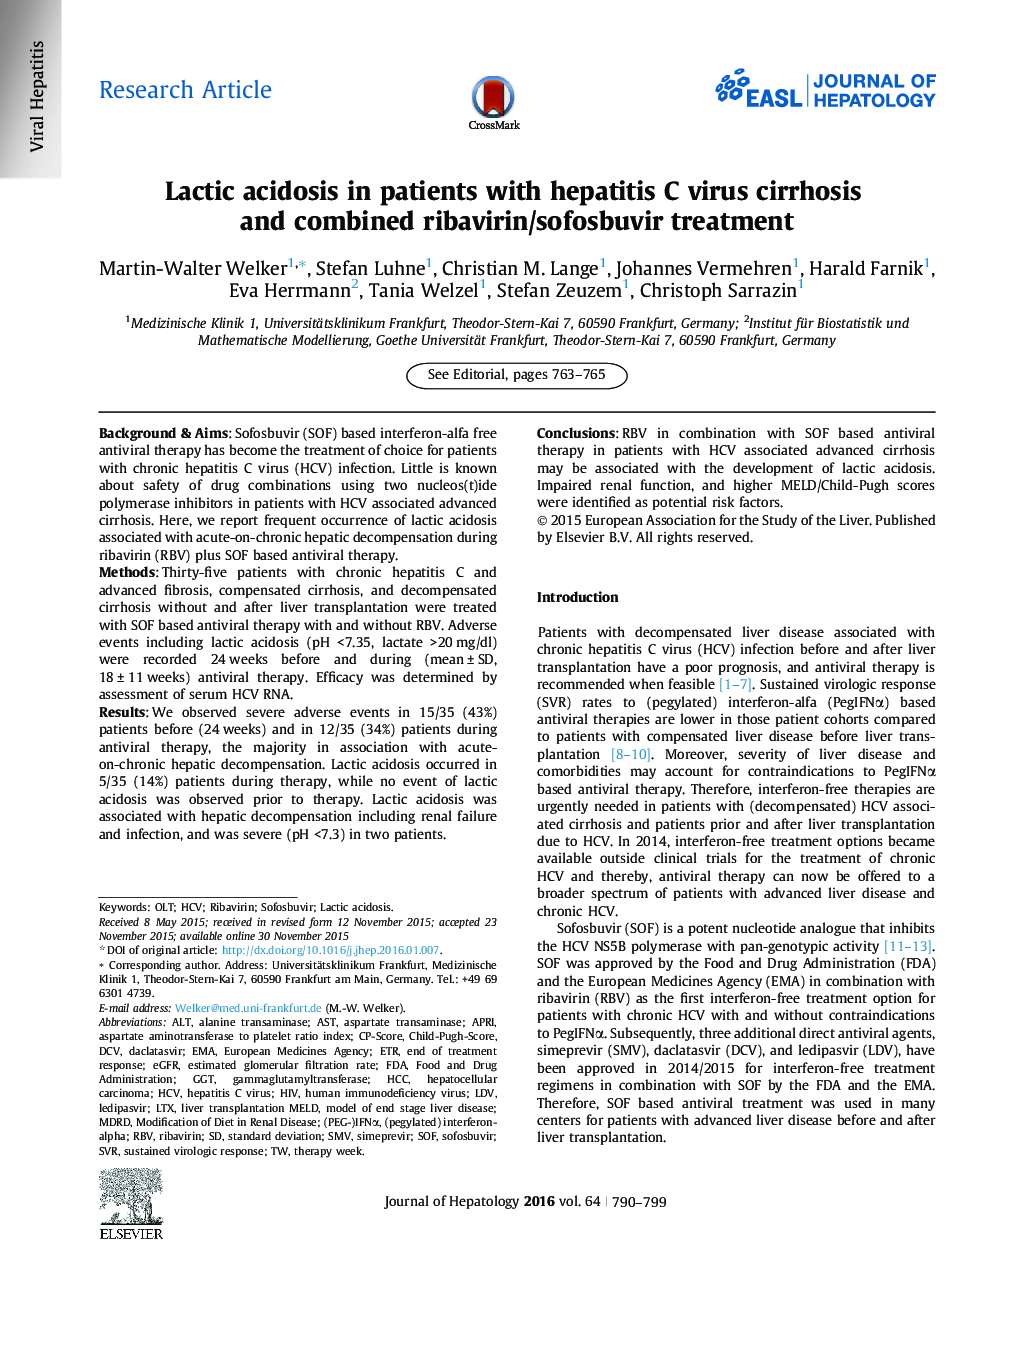 Research ArticleLactic acidosis in patients with hepatitis C virus cirrhosis and combined ribavirin/sofosbuvir treatment